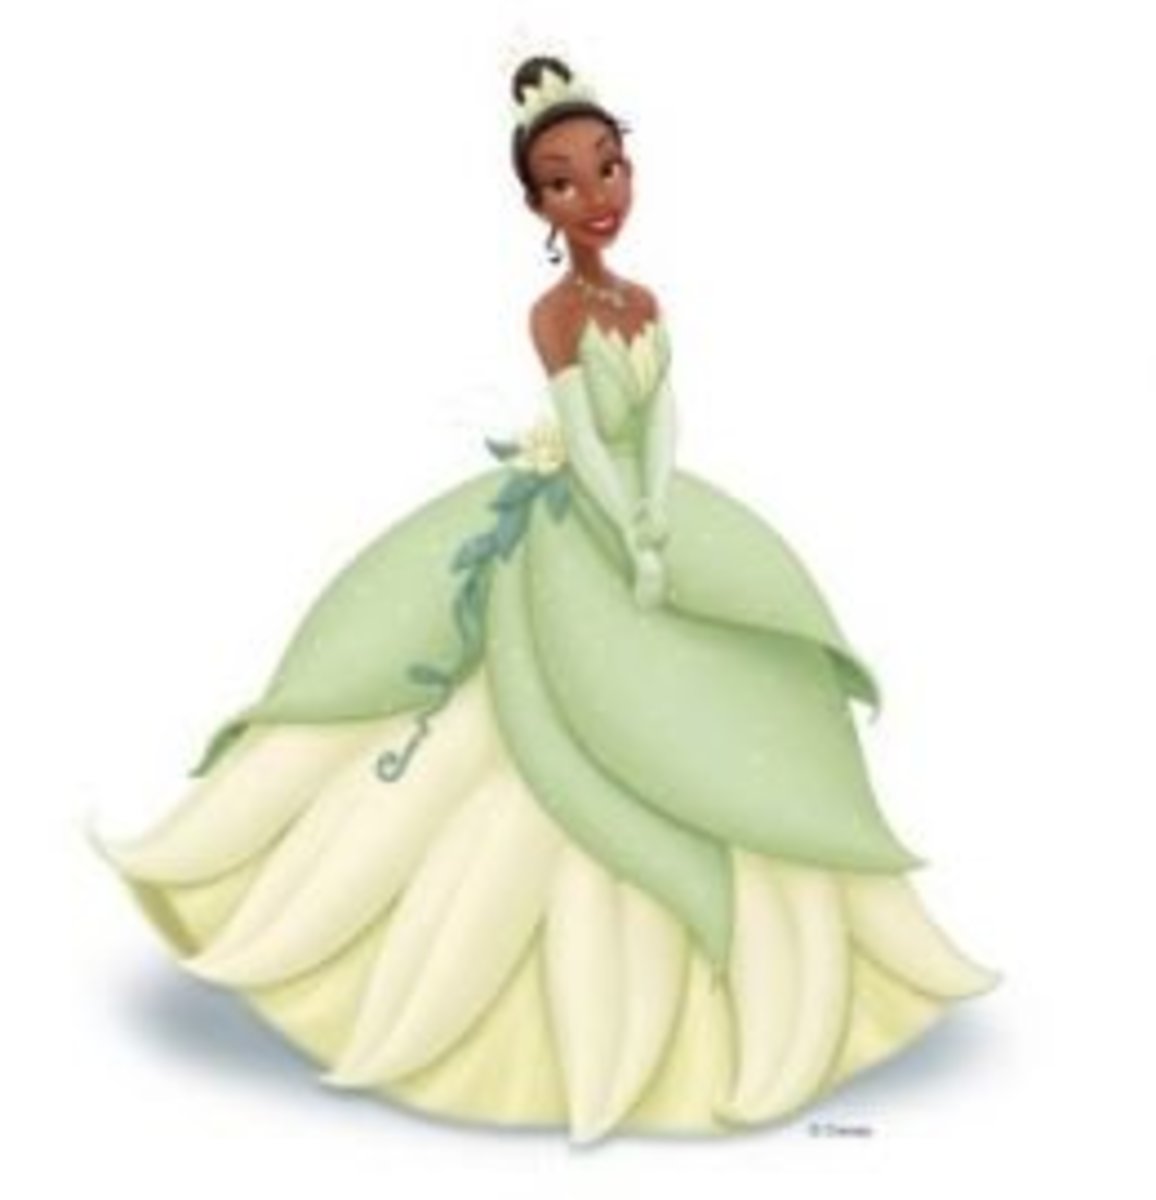 Tiana, Disney's first African American princess.